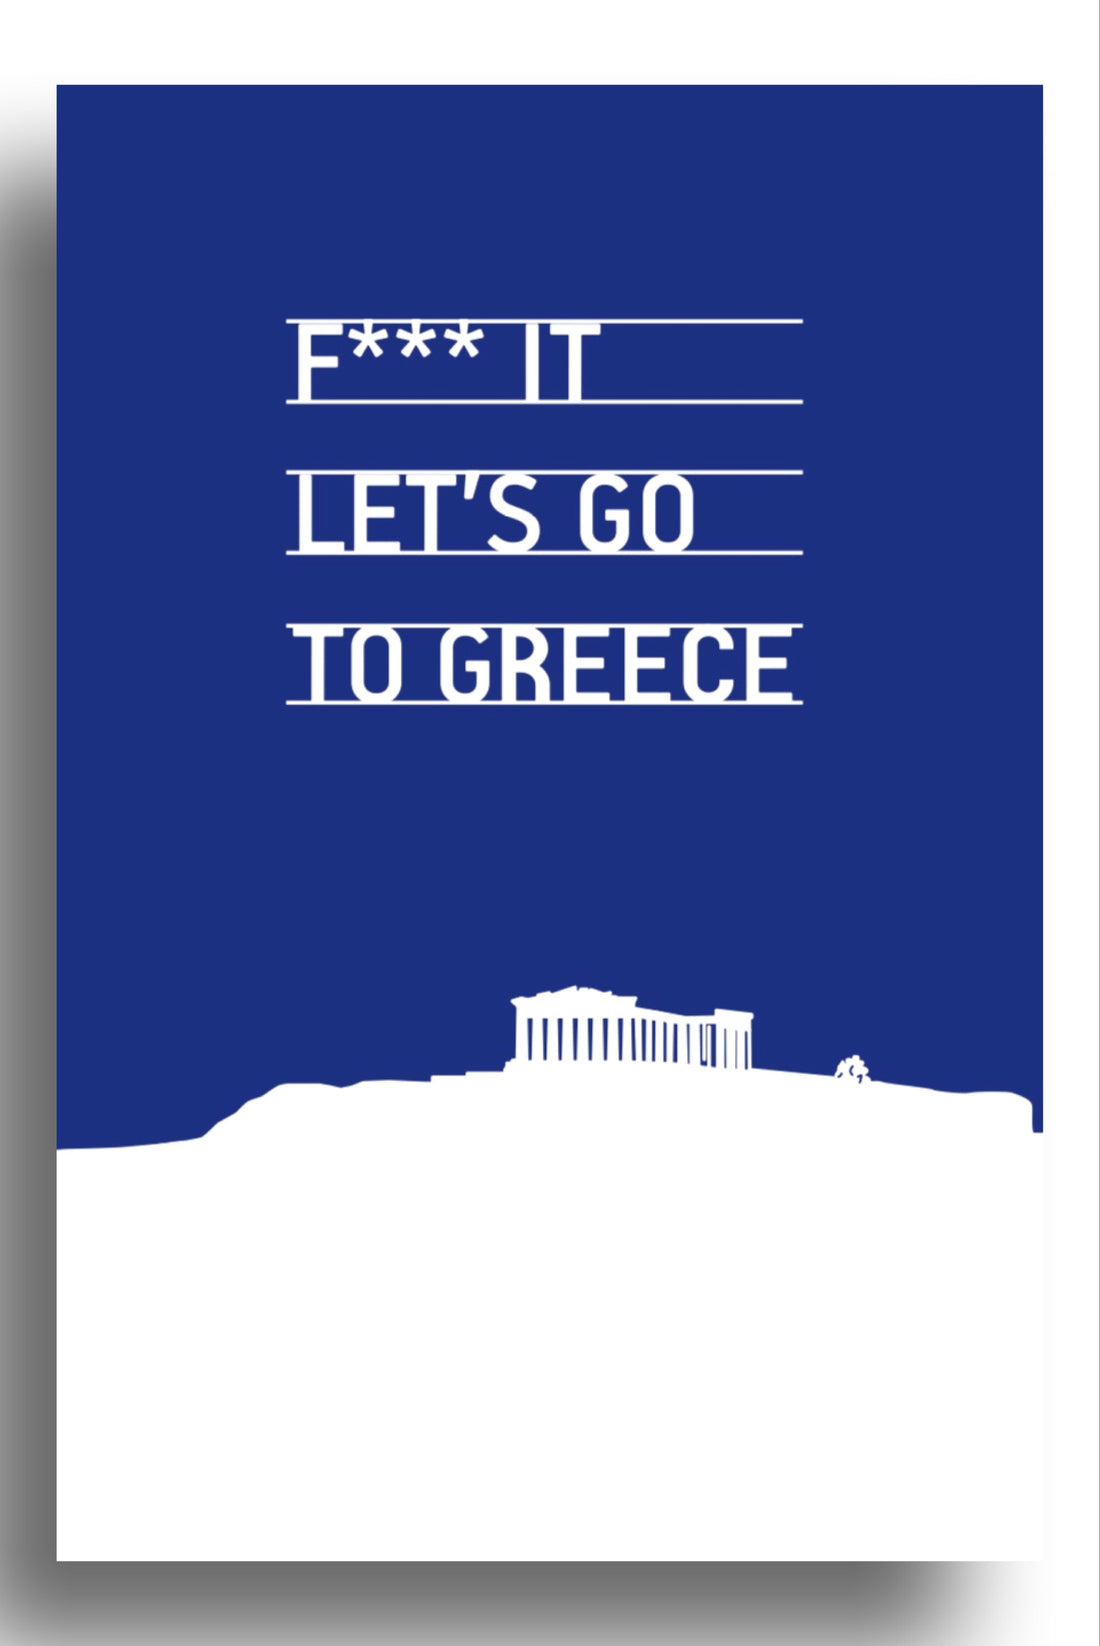 F**k let's go to Greece | art print